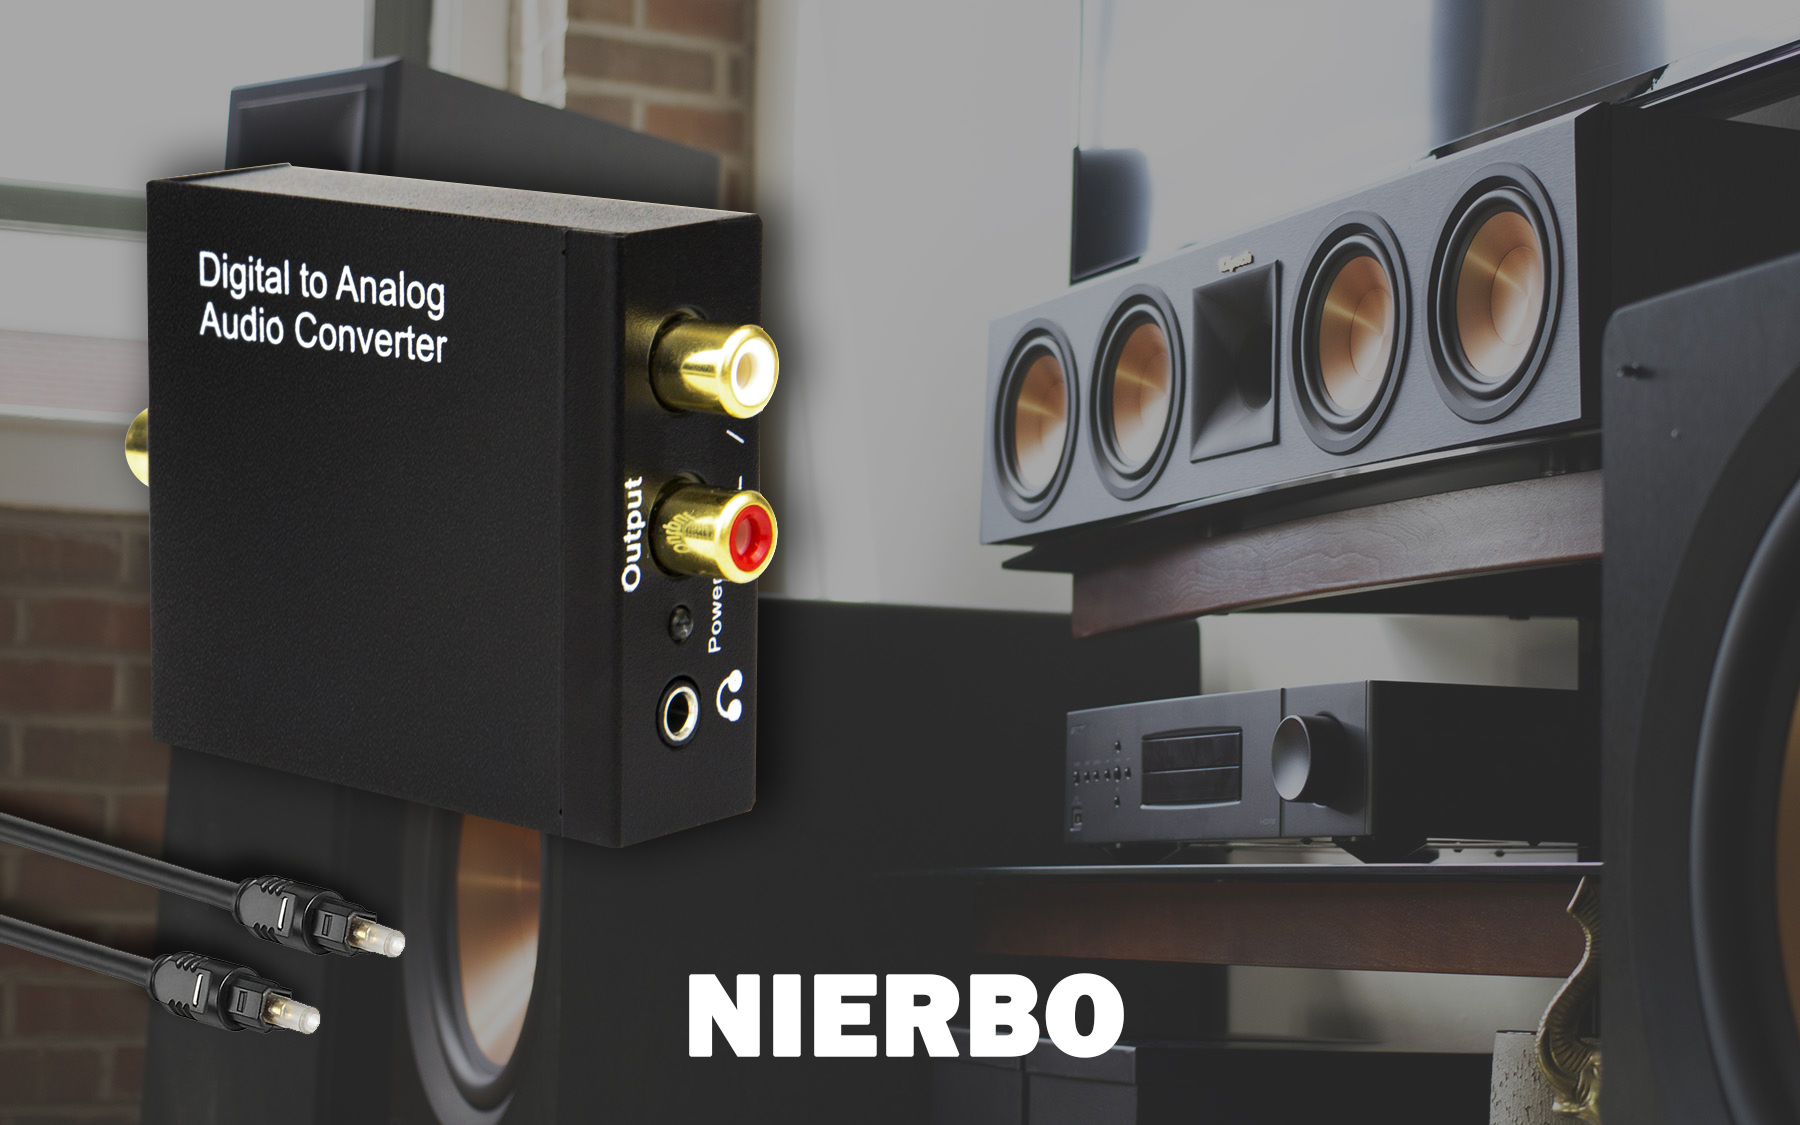 NIERBO Bluetooth 5.0 Transmitter Receiver, 3.5mm Wireless